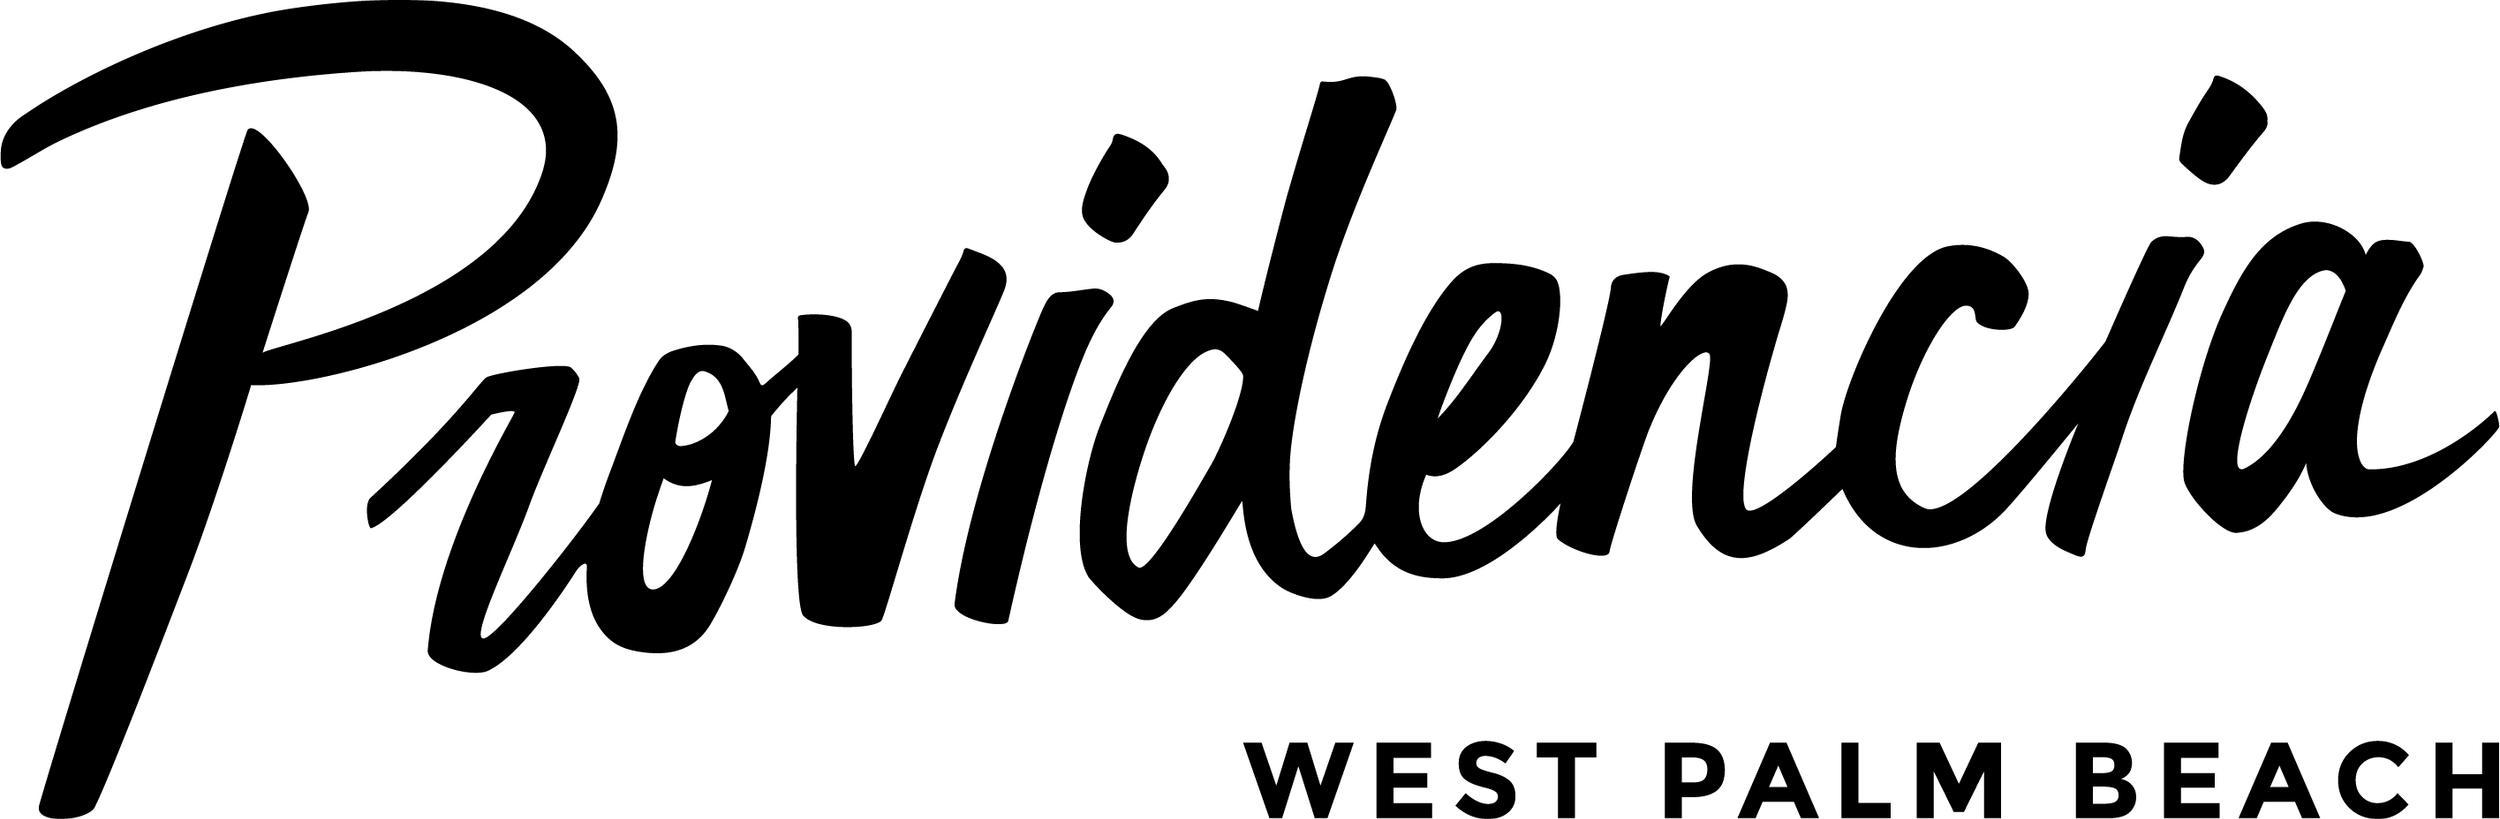 providencia logo.png